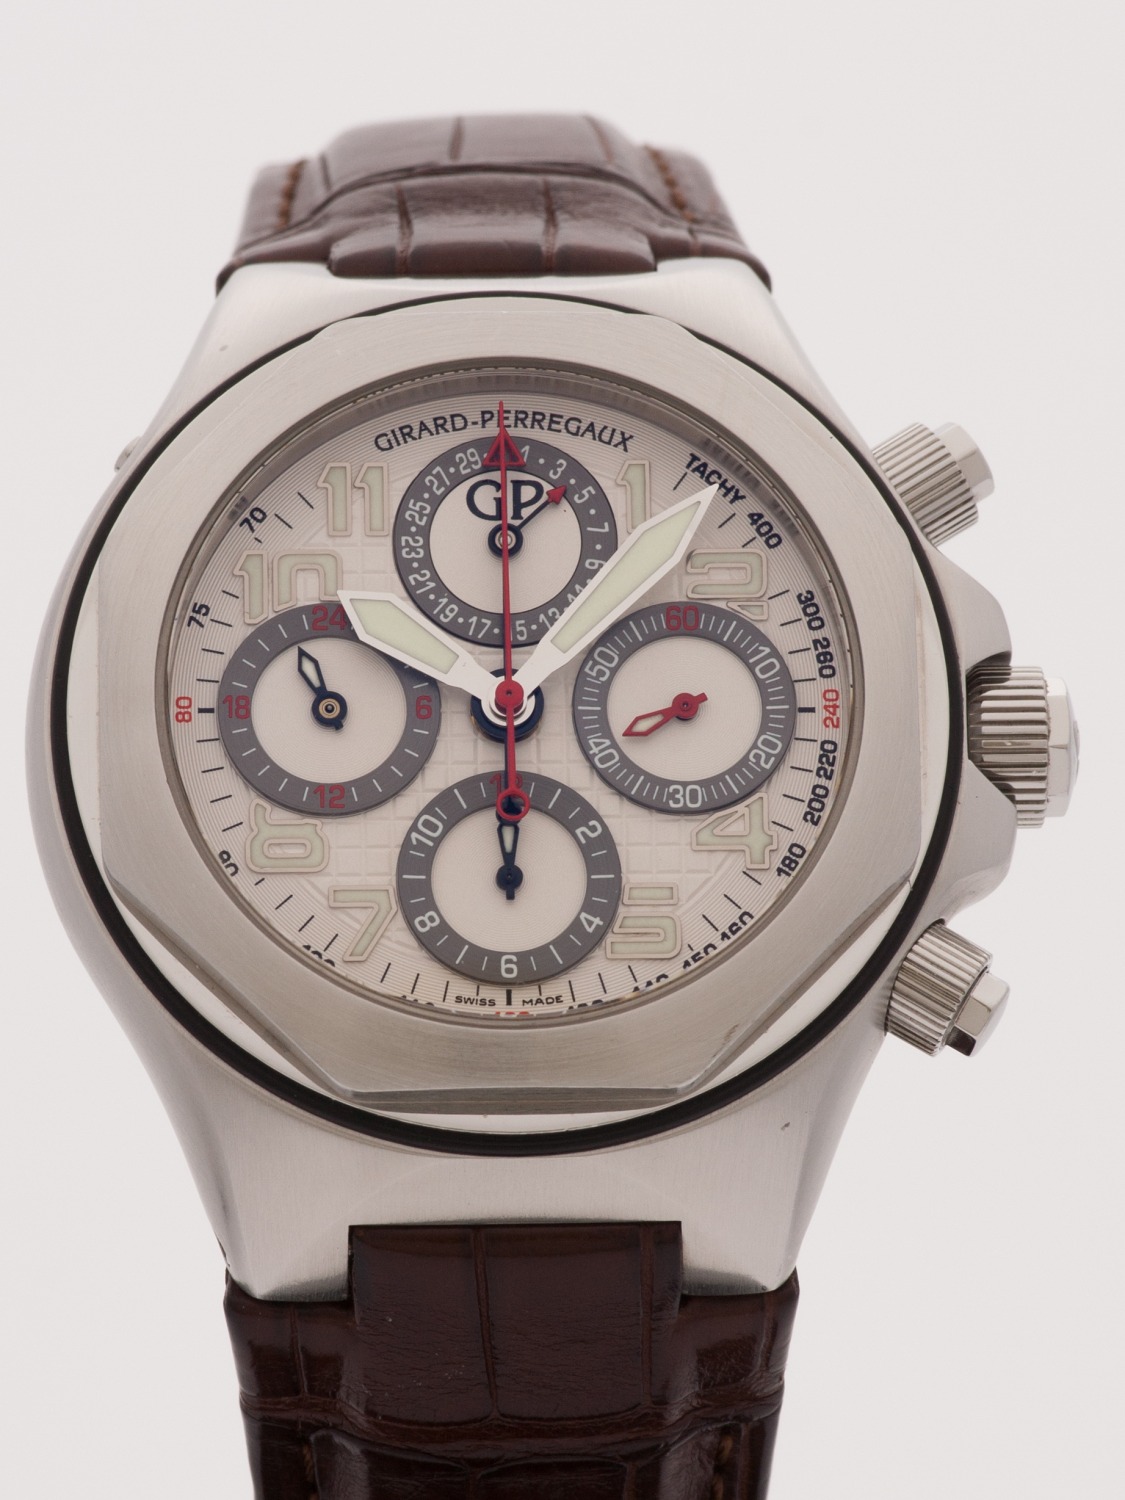 Girard-Perregaux Laureato Evo 3 Steel 44MM watch, silver